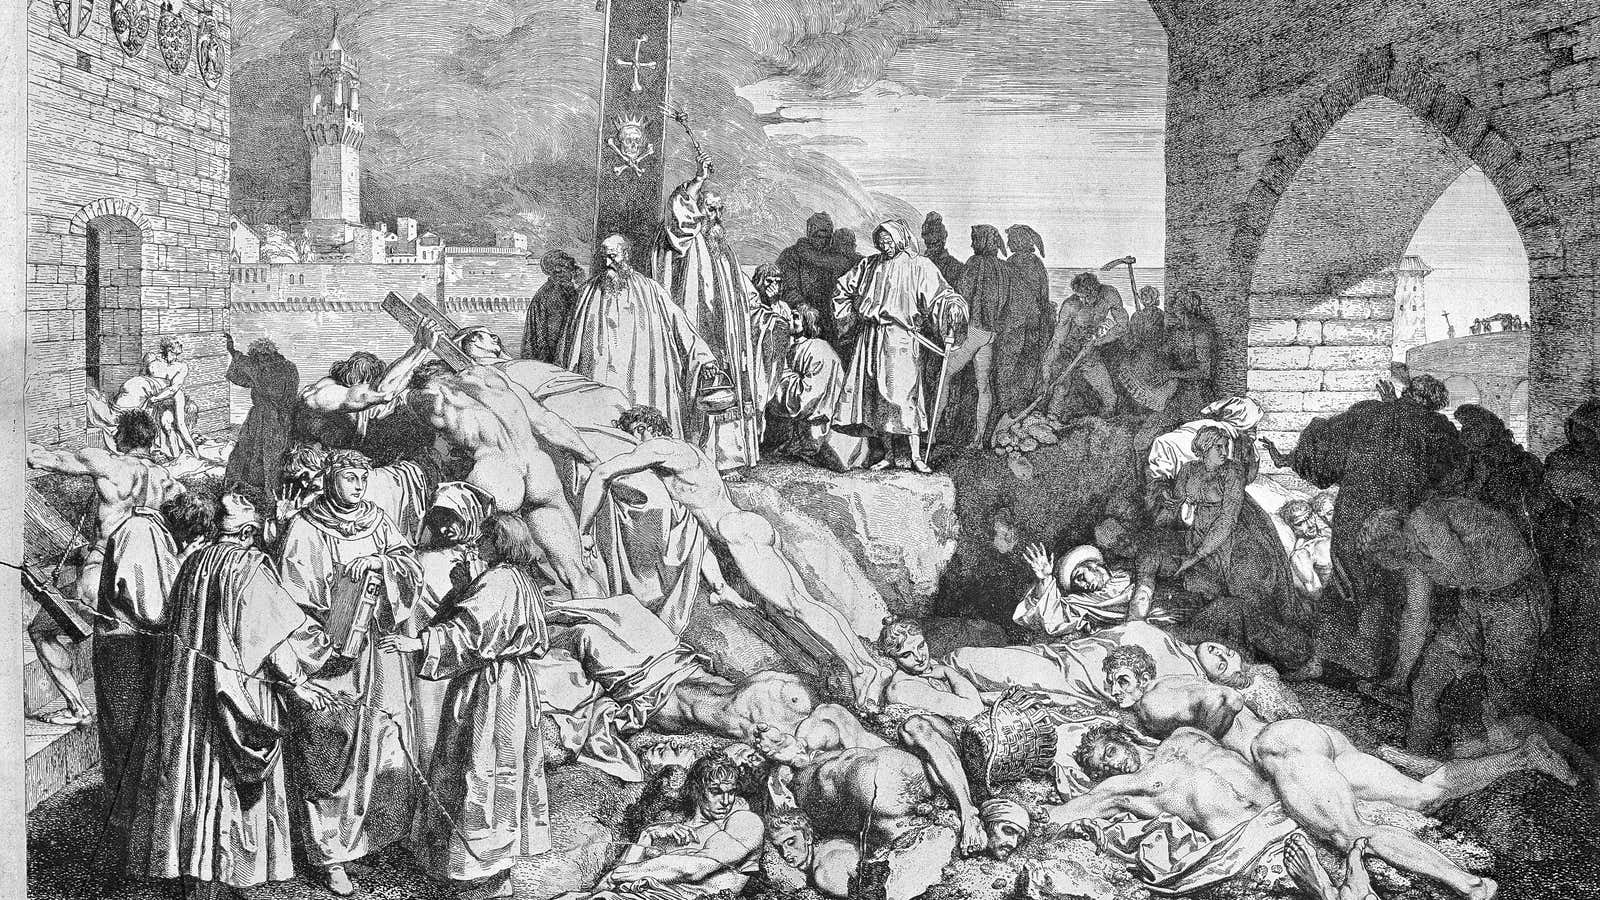 The plague of Florence in 1348, as described in Boccaccio’s Decameron.